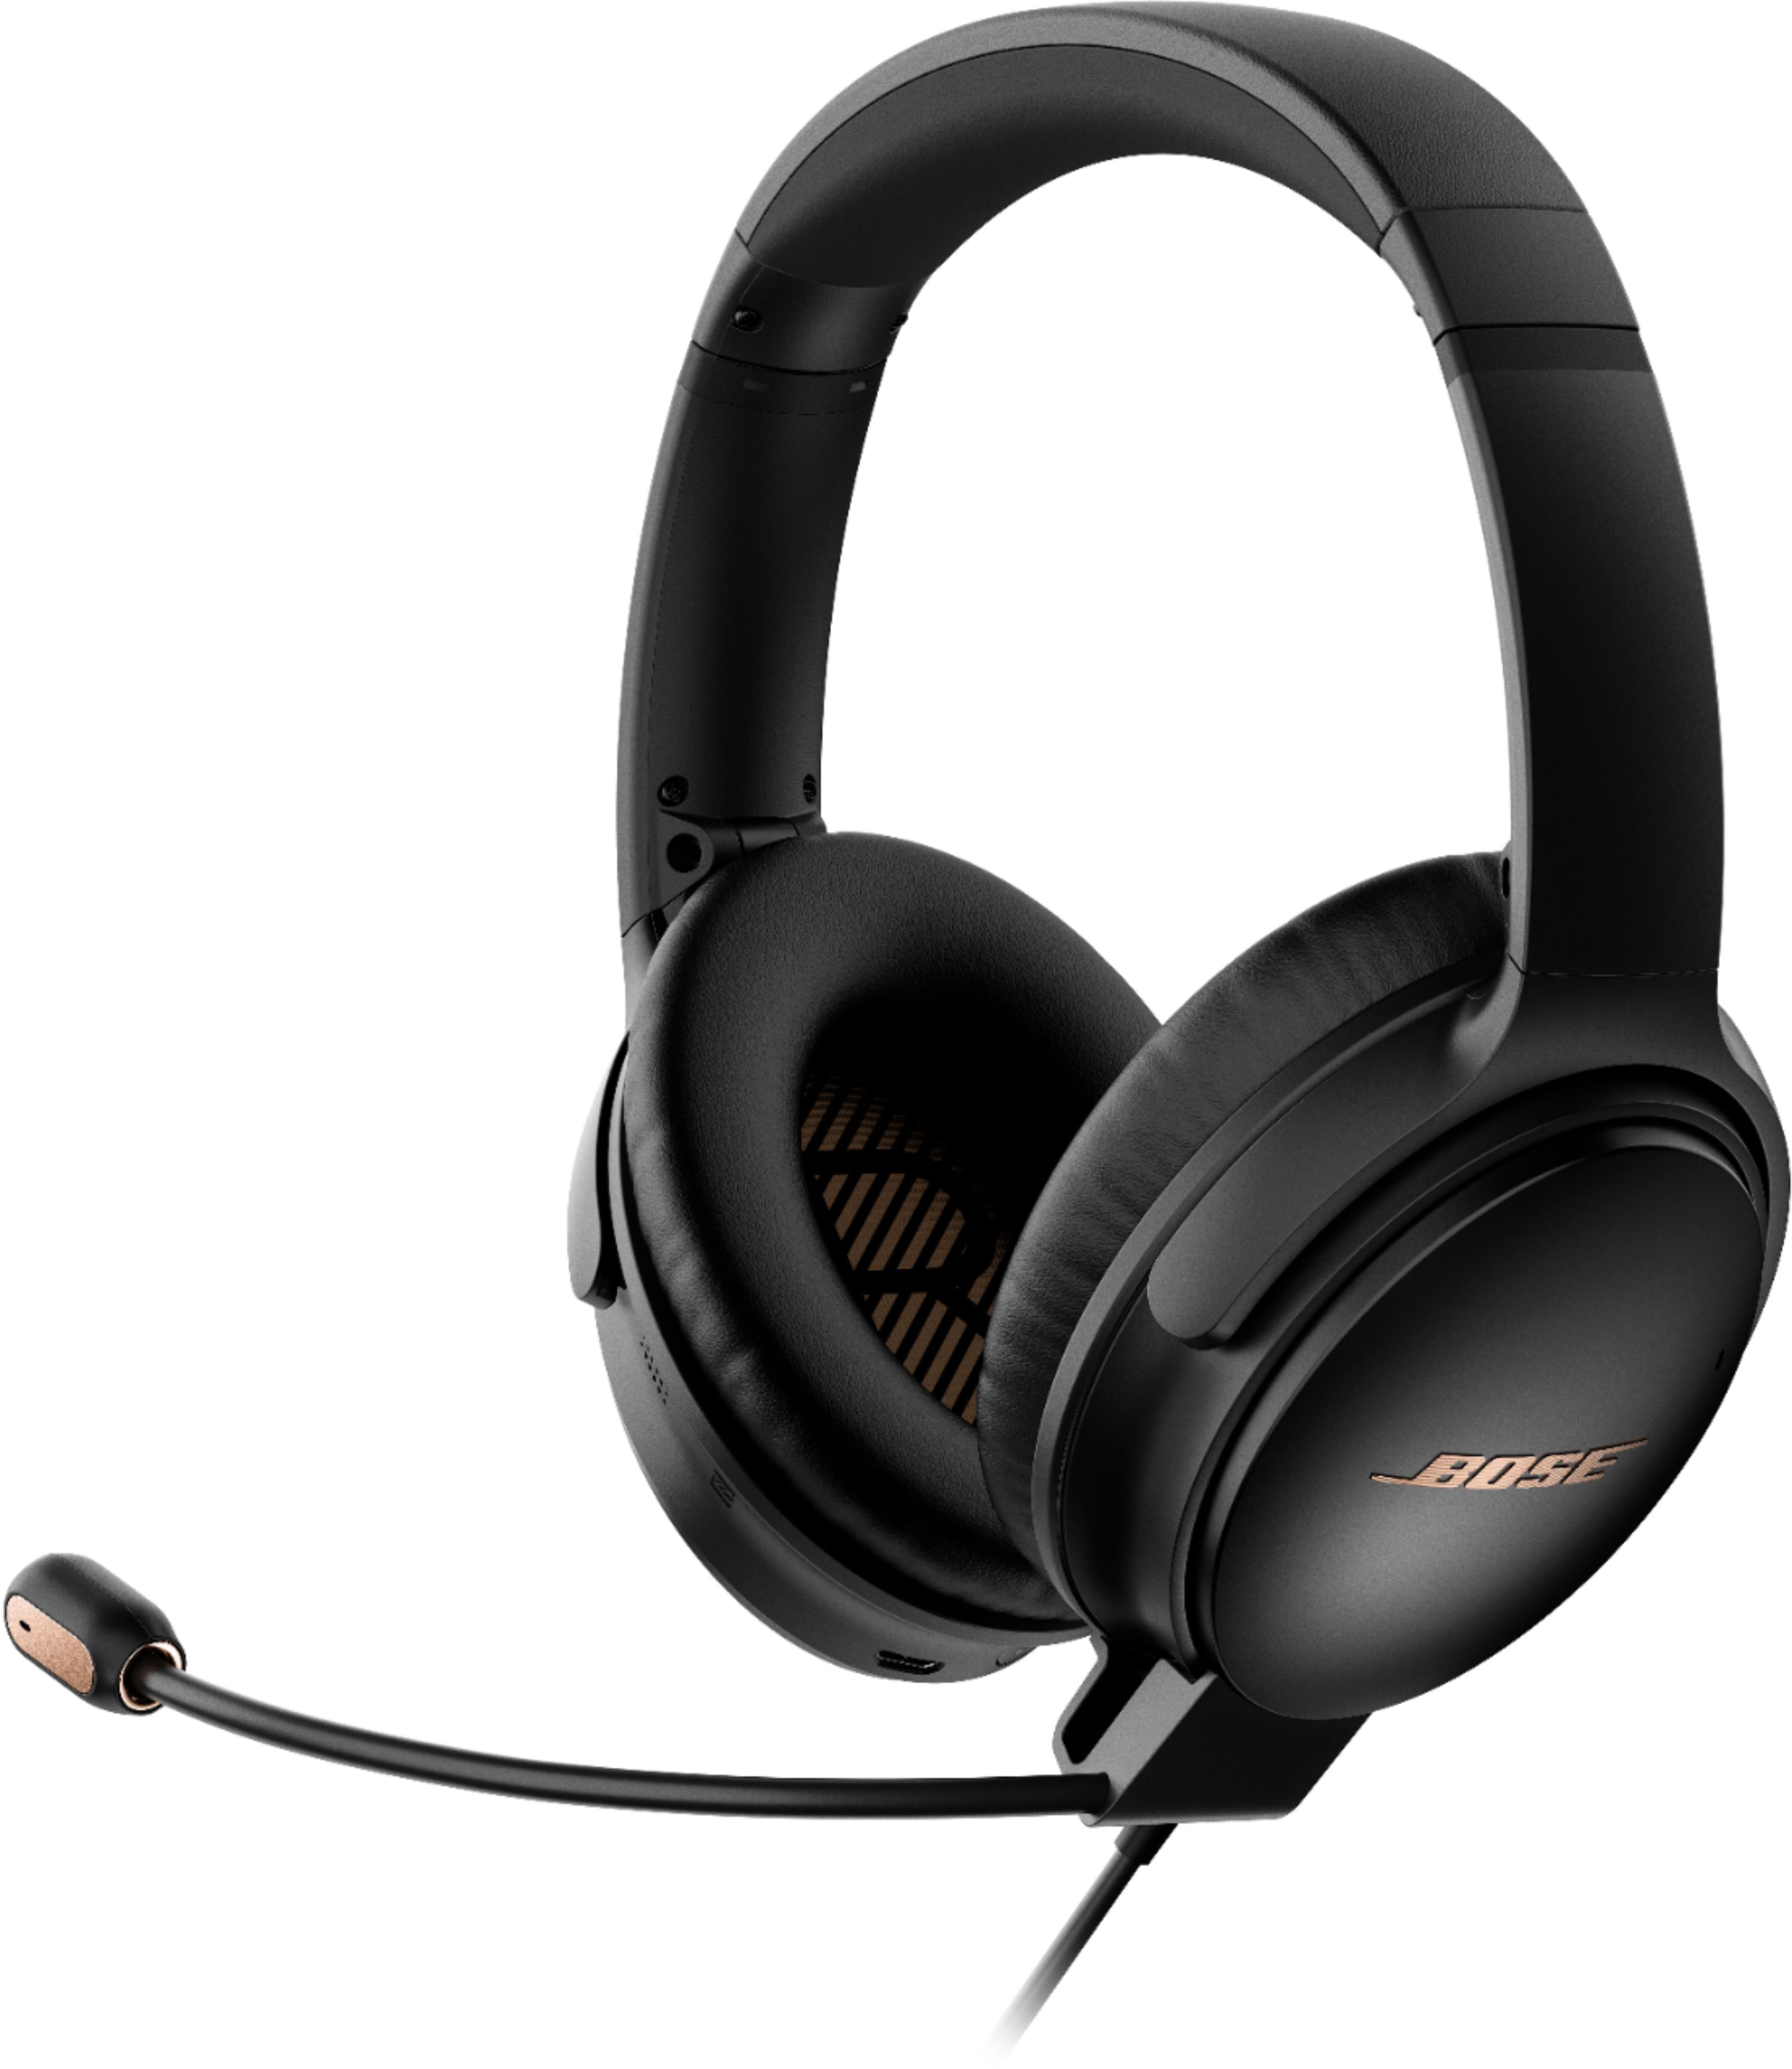 Afstå chikane samvittighed Bose QuietComfort 35 II Wireless Noise Cancelling Gaming Headset Black  852061-0010 - Best Buy